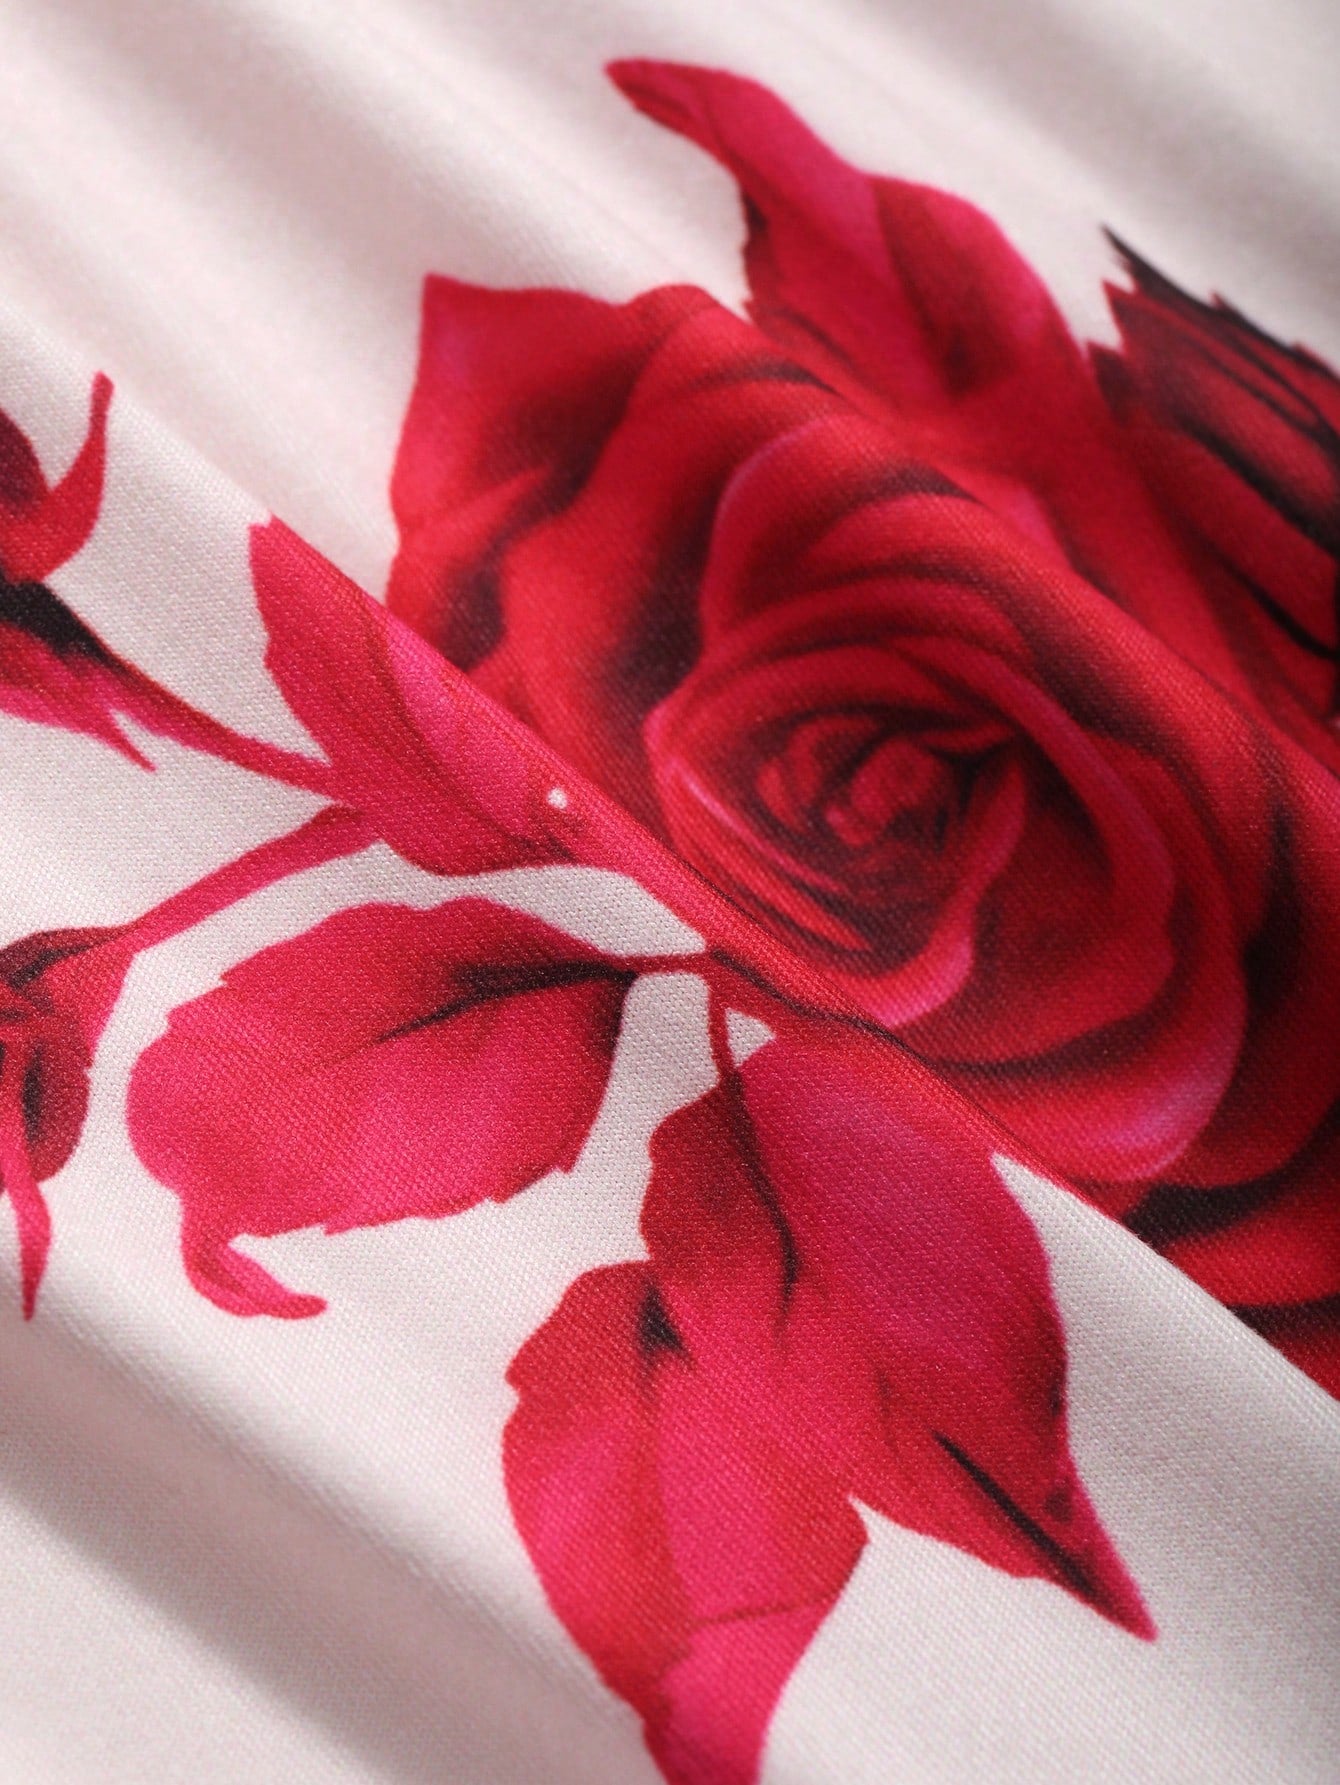 Romantic Floral Printed Slim Fit Cami Sleep Dress